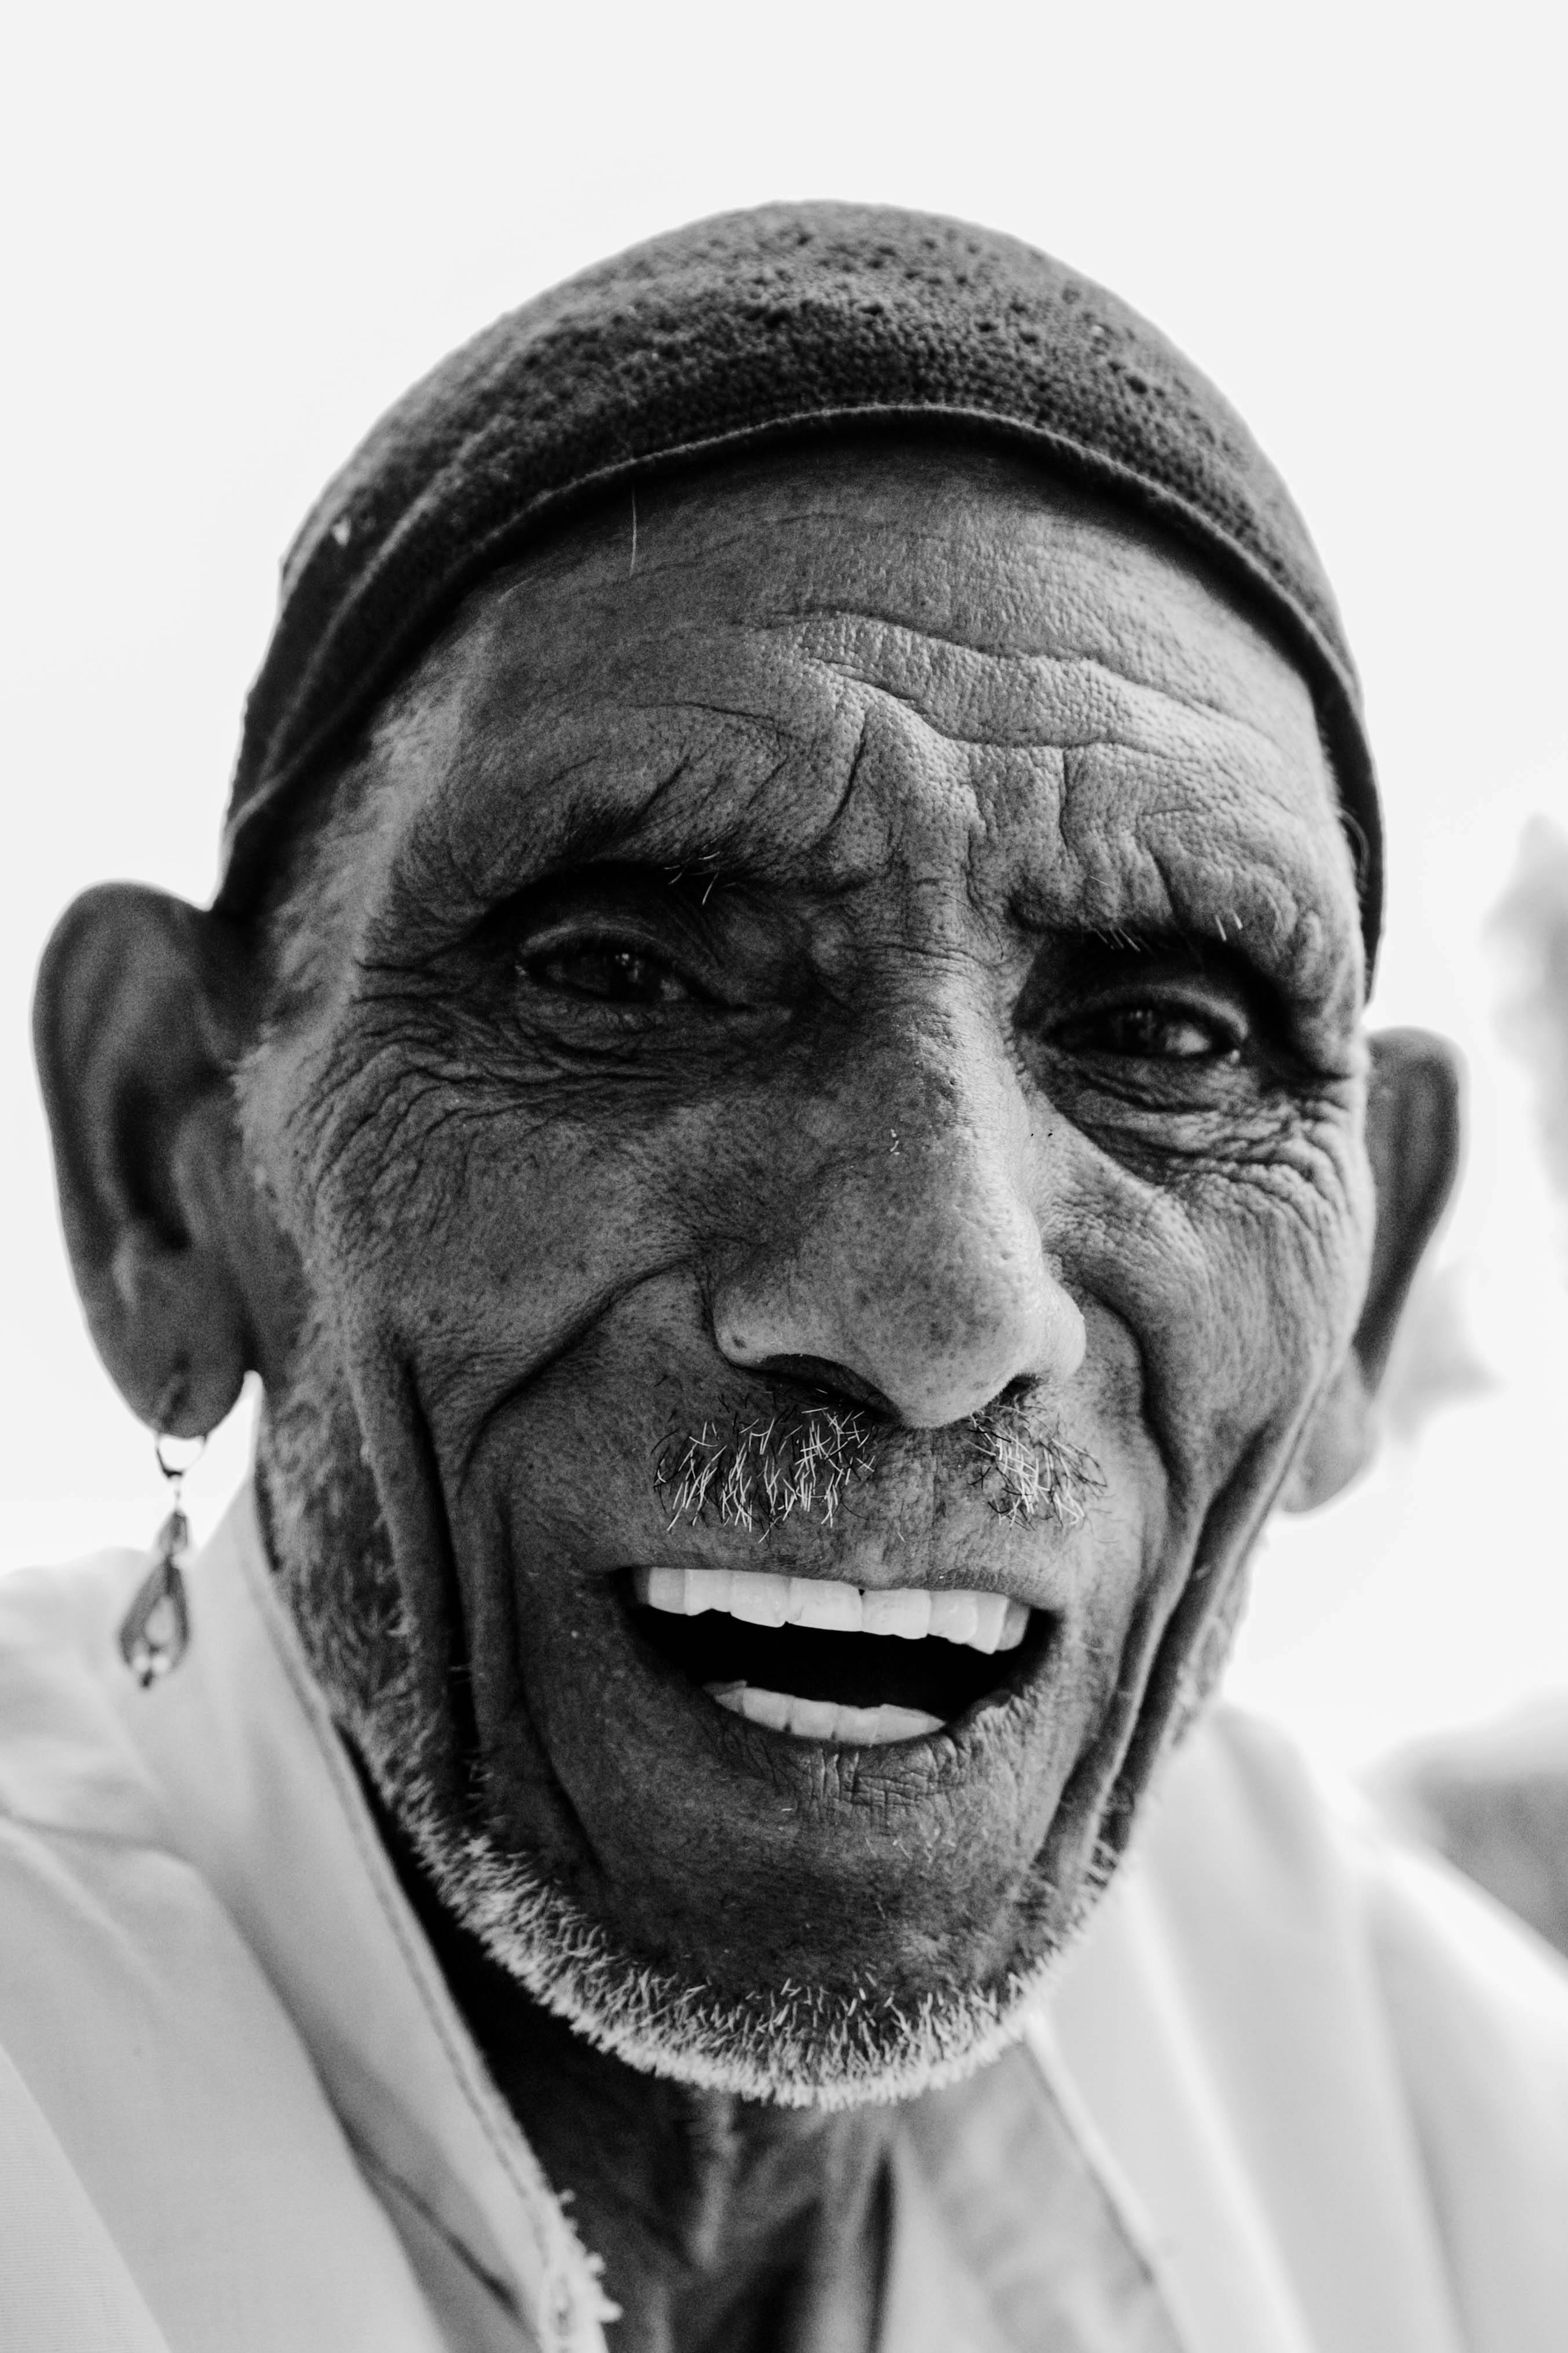 elderly black man smiling